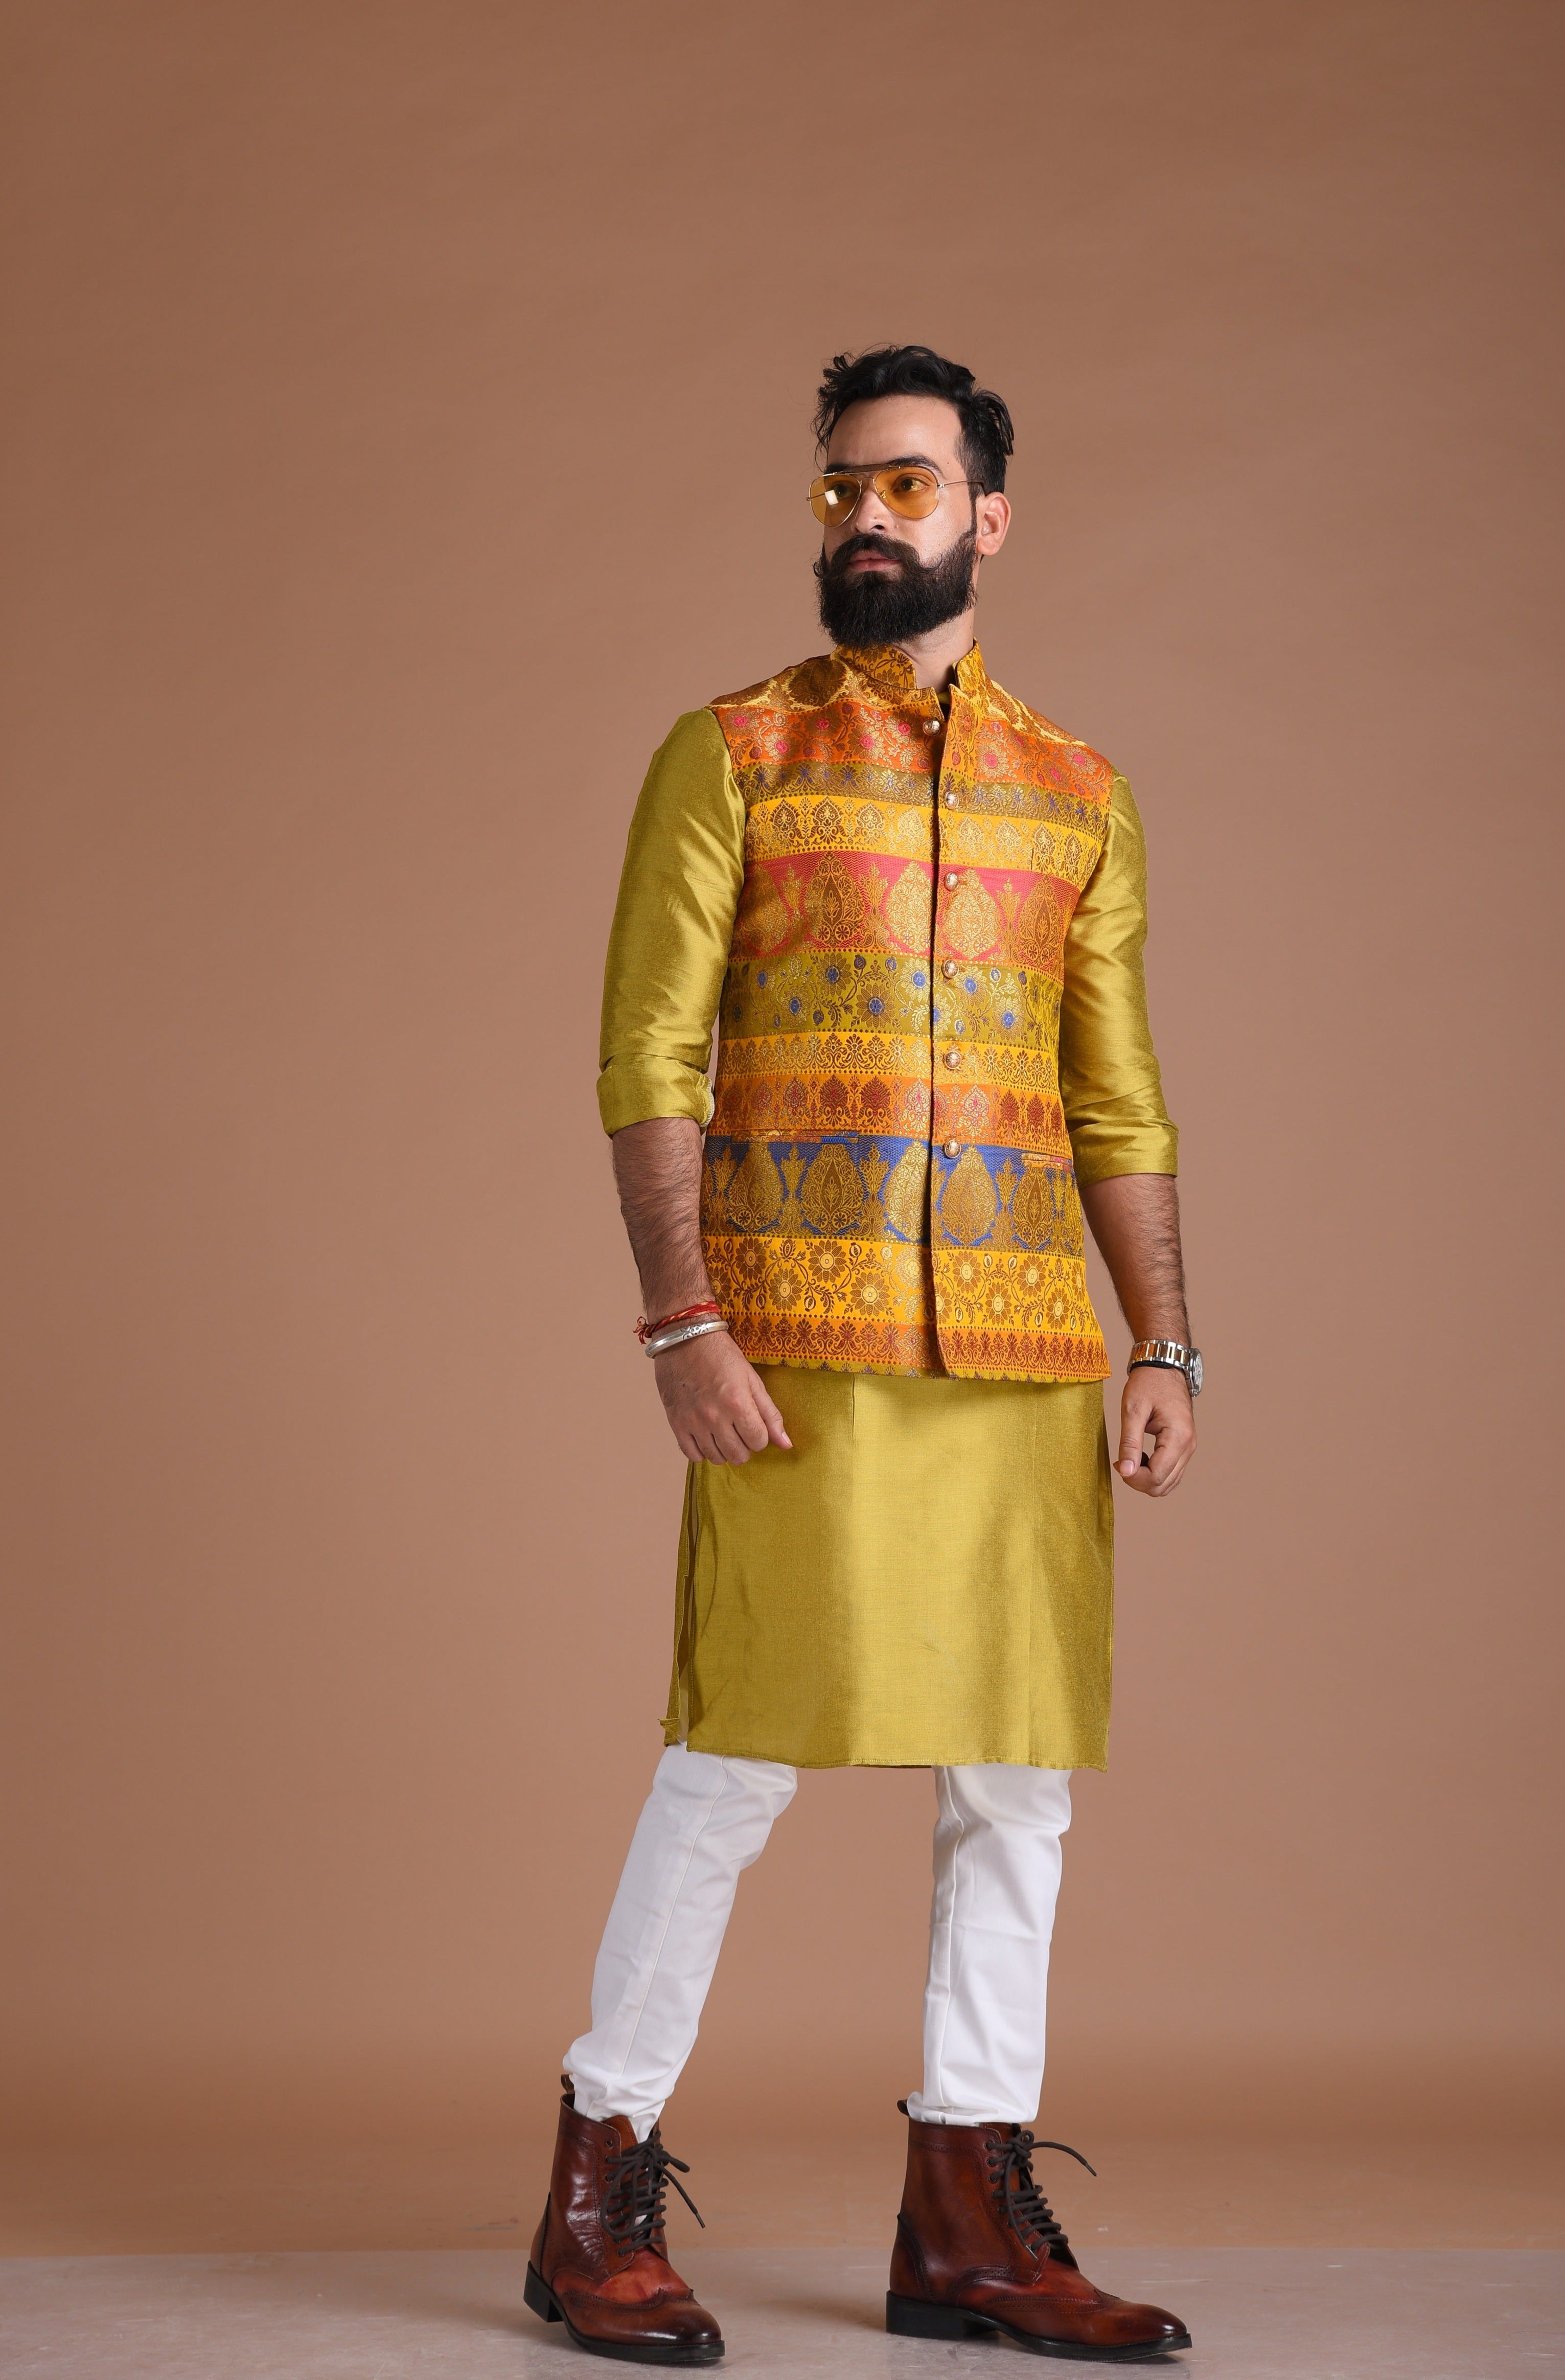 Vibrant Yellow Color Designer Half Jodhpuri Jacket With Silk Kurta Pajma Best For Wedding Function |Open Day Functions | Haldi Functions